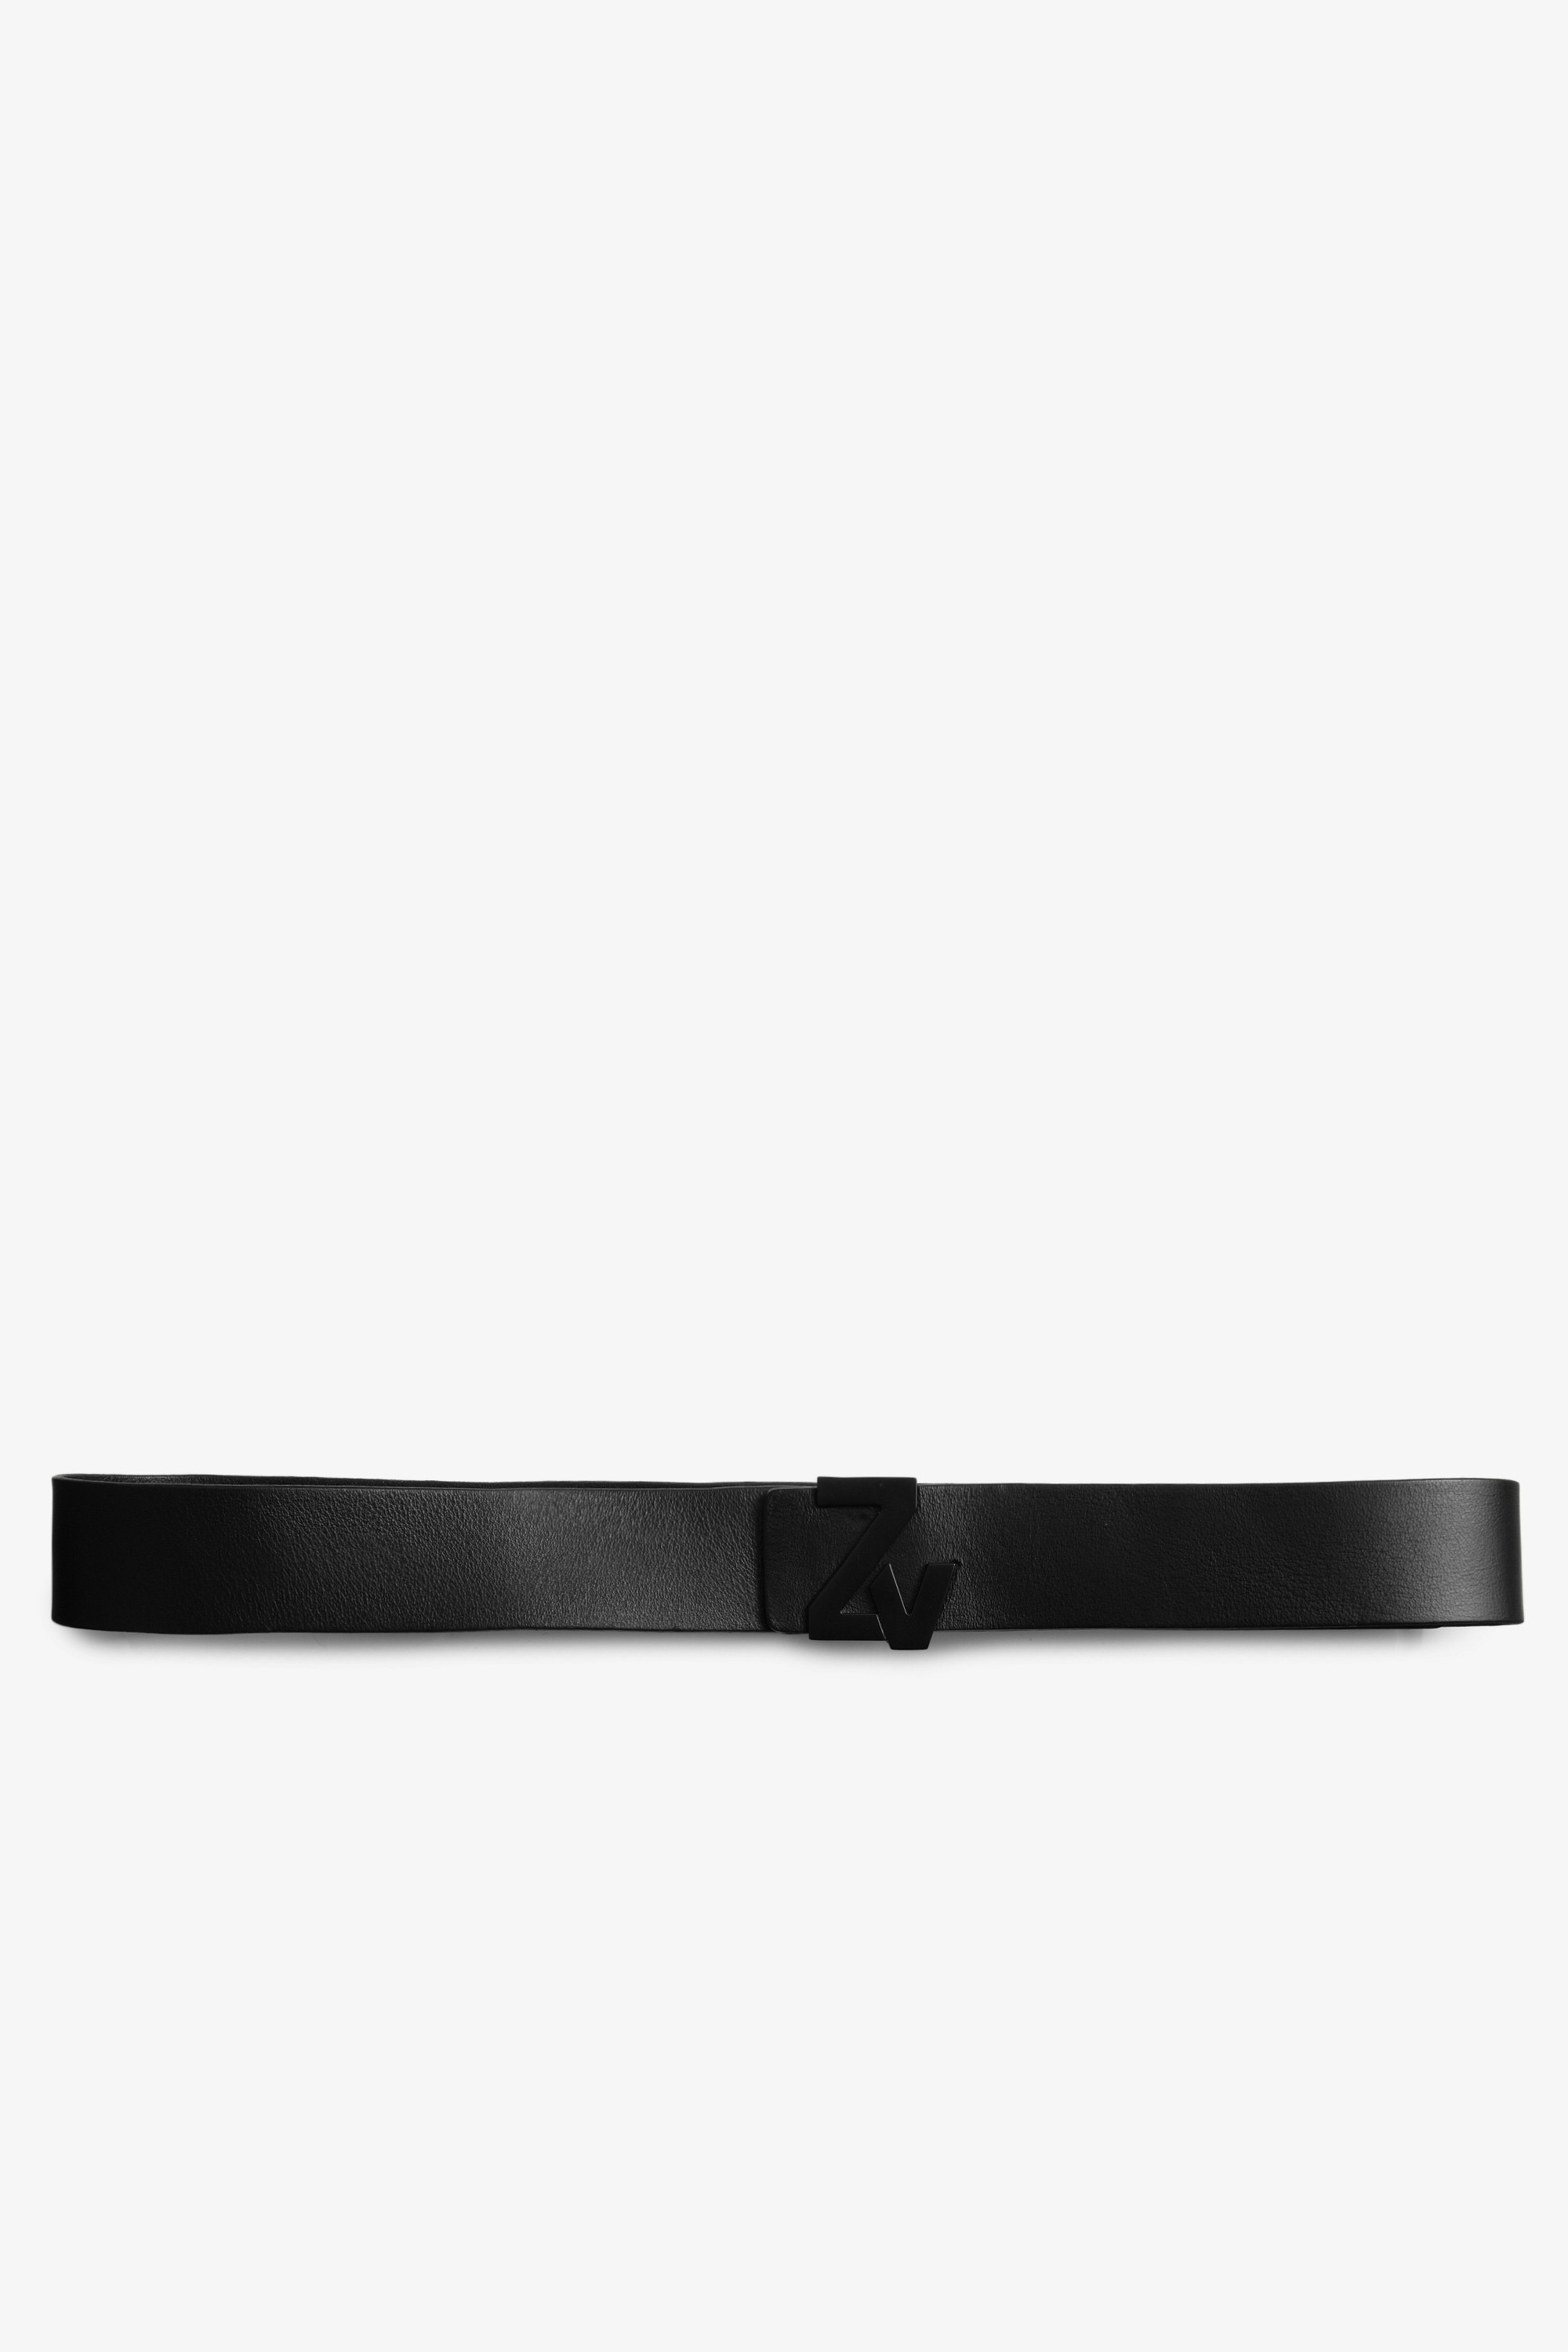 ZV Initiale La ベルト レザー Men's black leather belt with ZV buckle